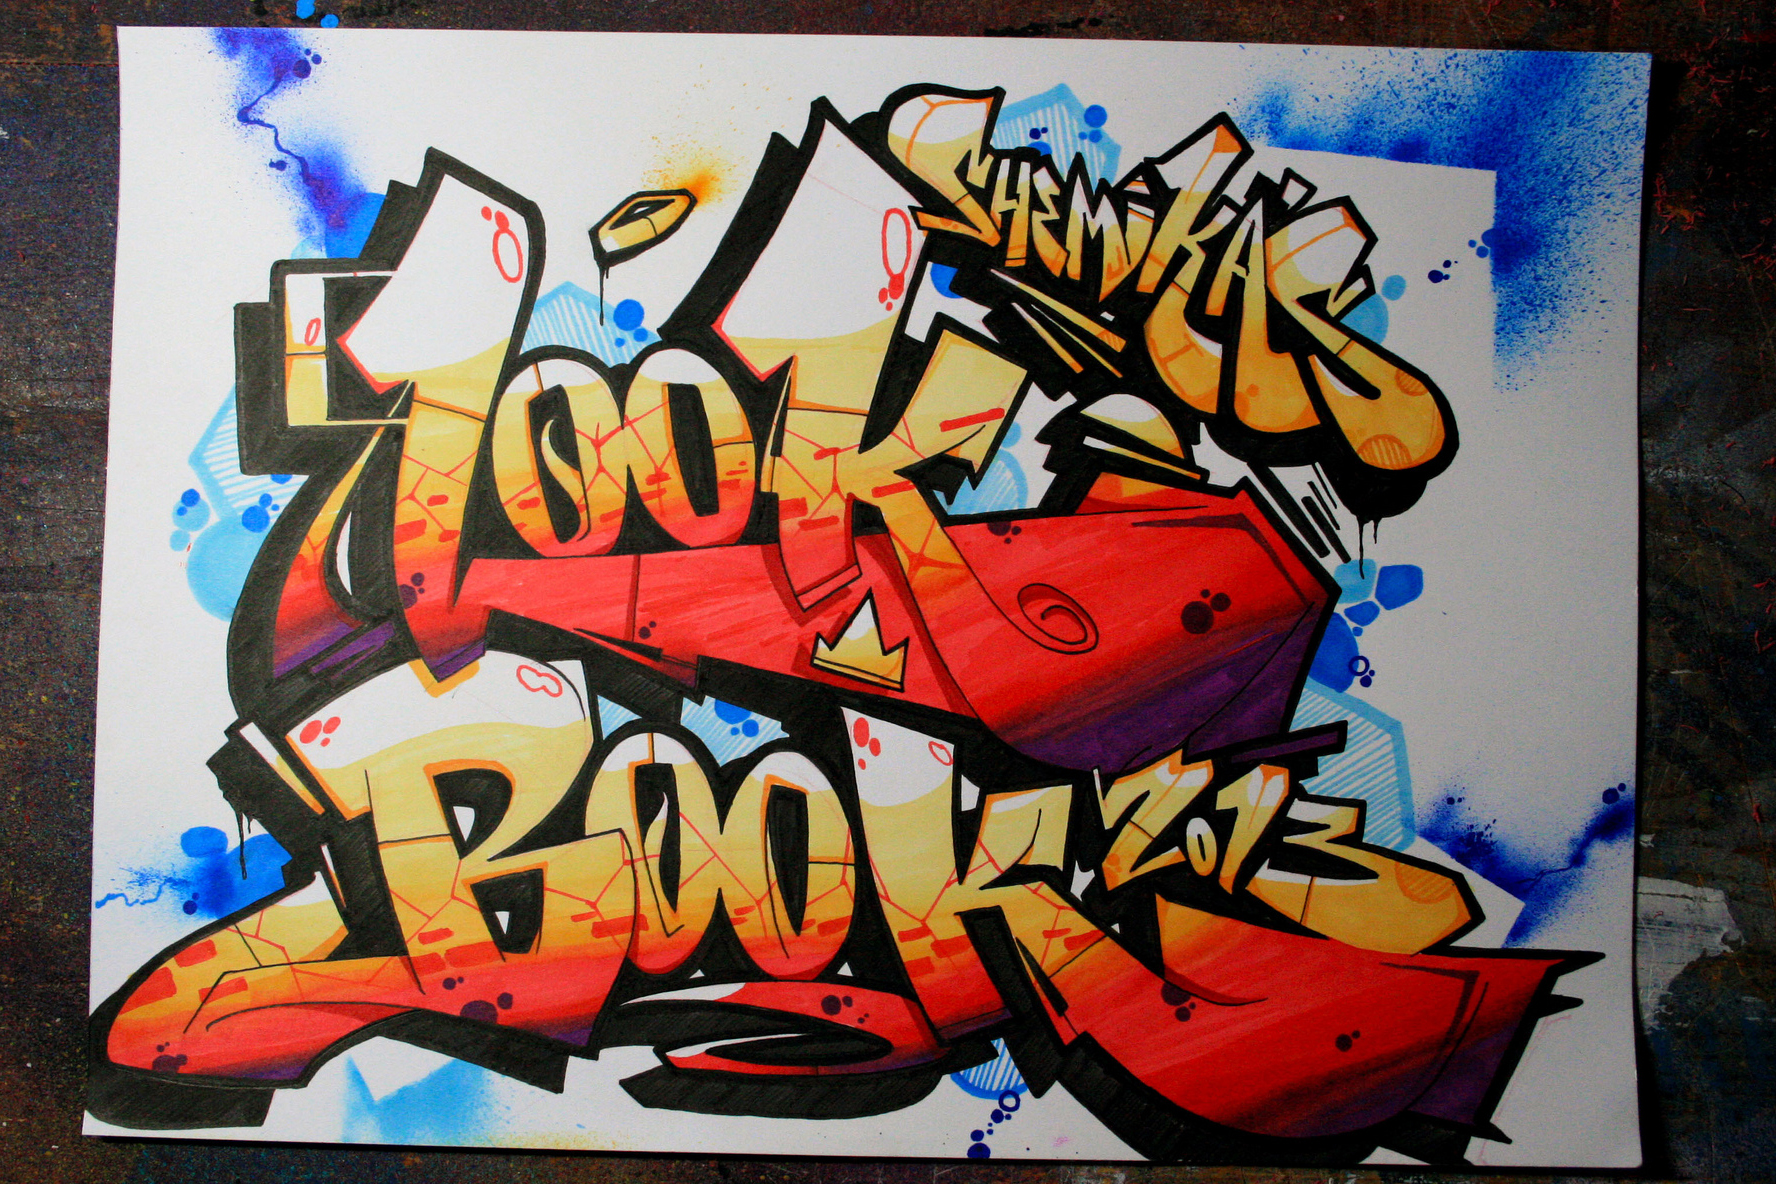 Graffiti cover reads "Look Book"